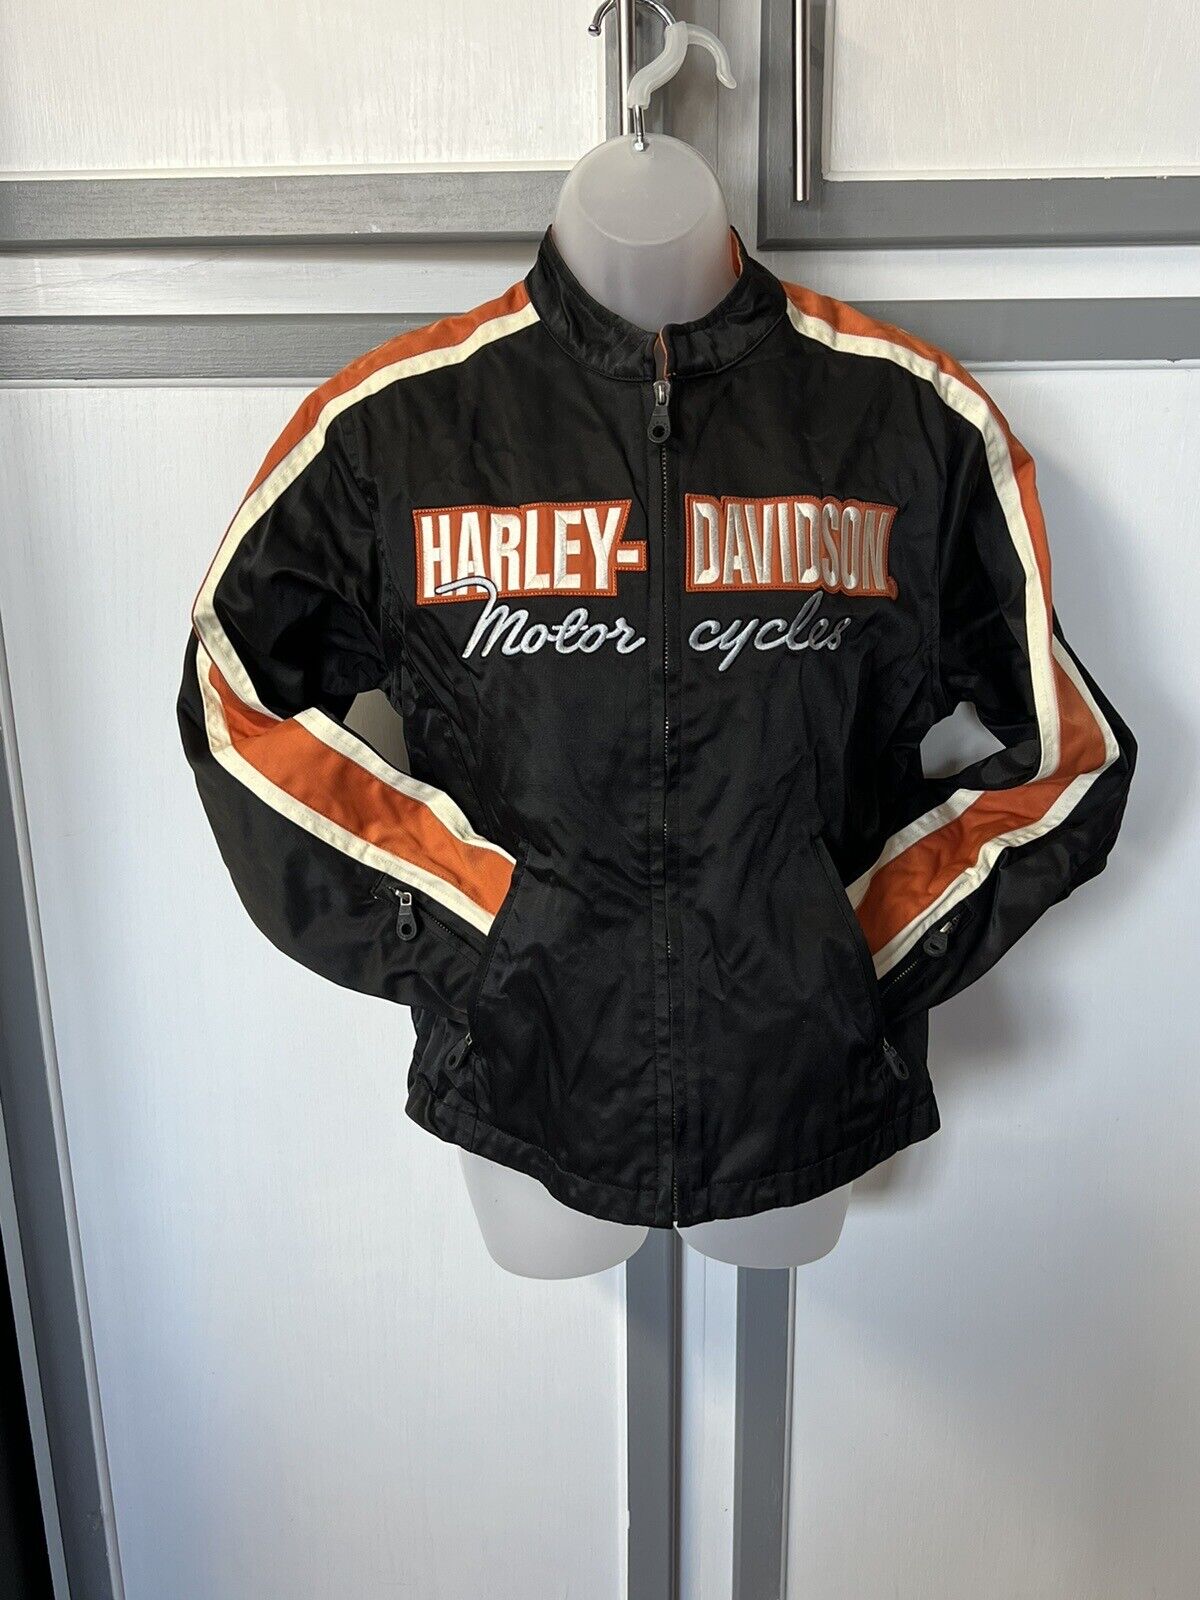 Woman’s Harley Davidson Motorcycle Riding Jacket Large Orange Black Embroidered